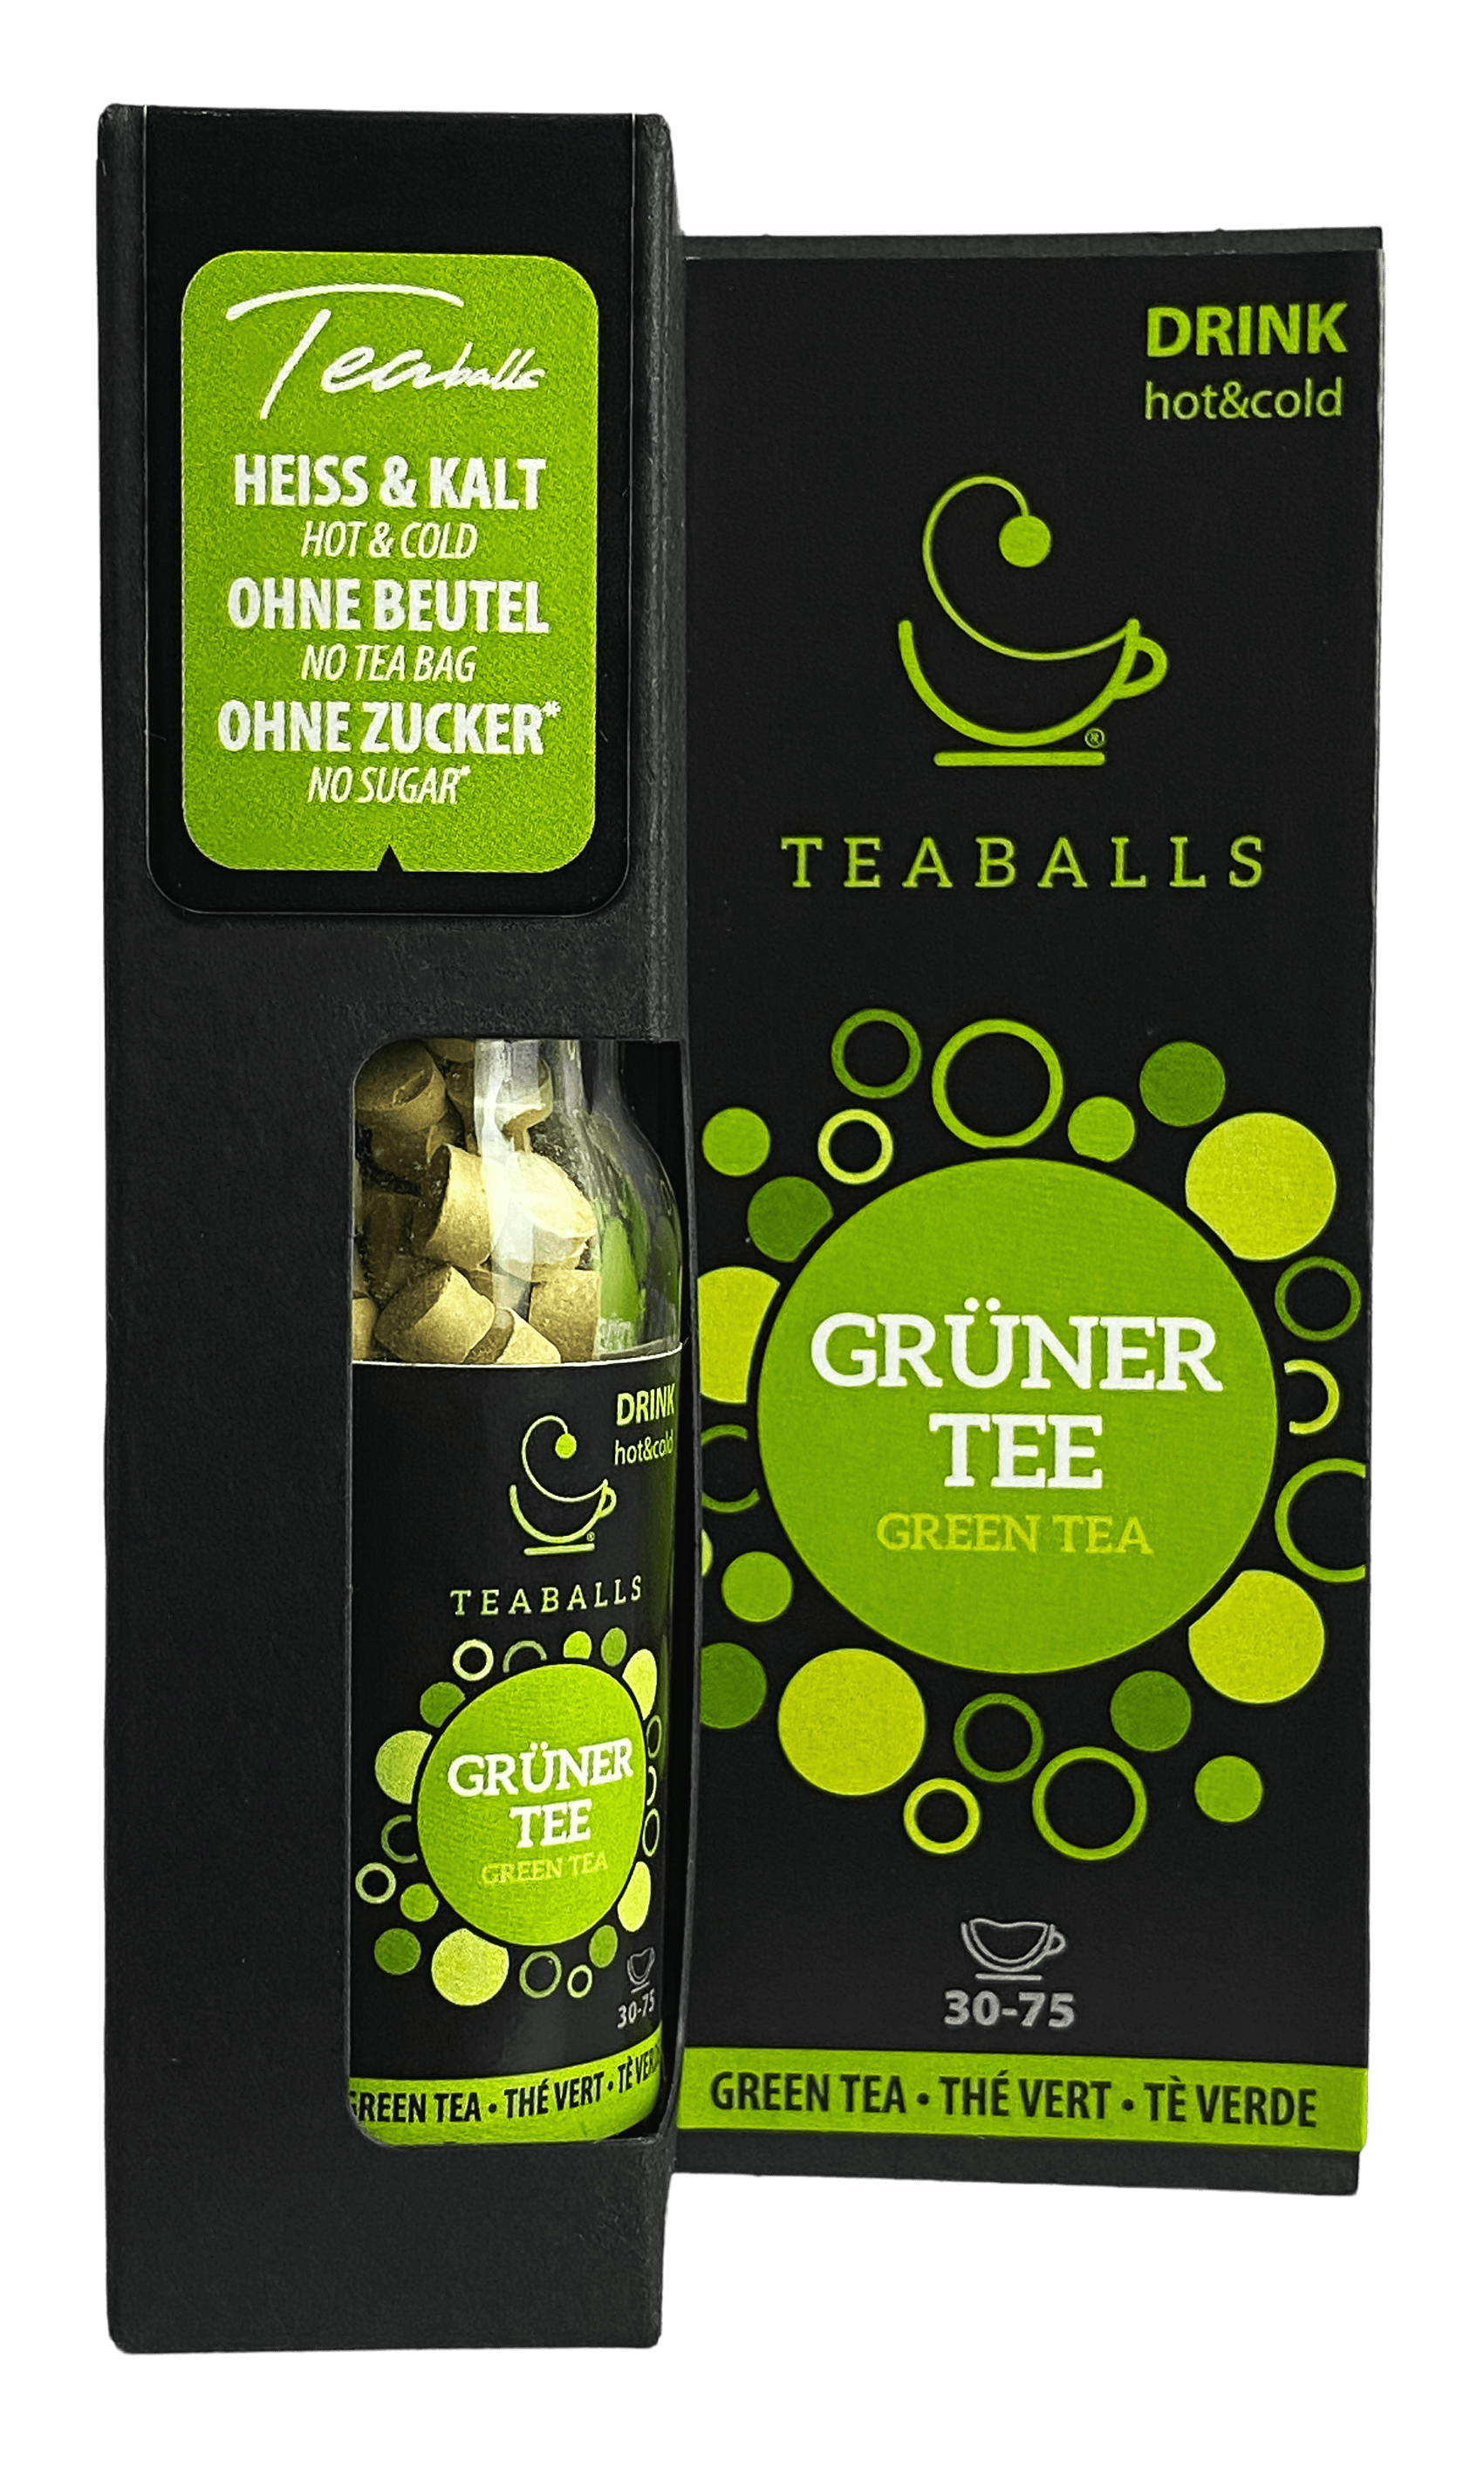 TEABALLS - Grüner Tee | BLACK SELECTION | 30-75 Tassen - MYTEACOFFEE.COM | TEABALLS Online bestellen | Tee ohne Beutel